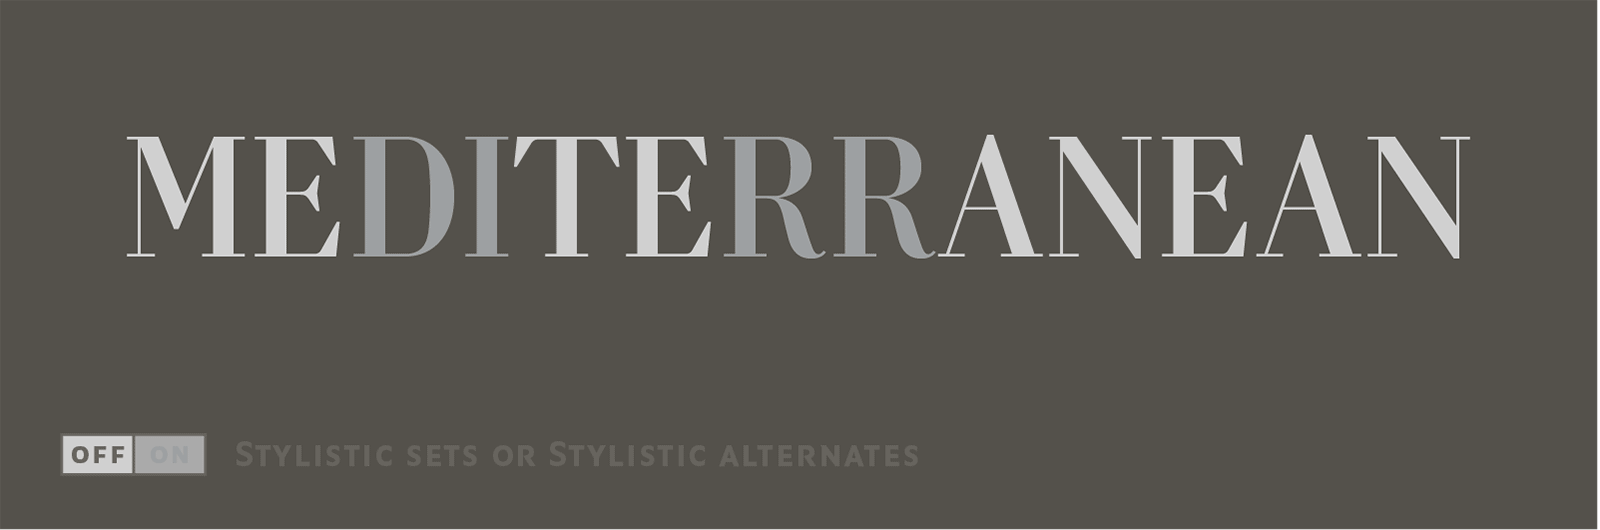 Stylistic sets and Stylistic Alternates